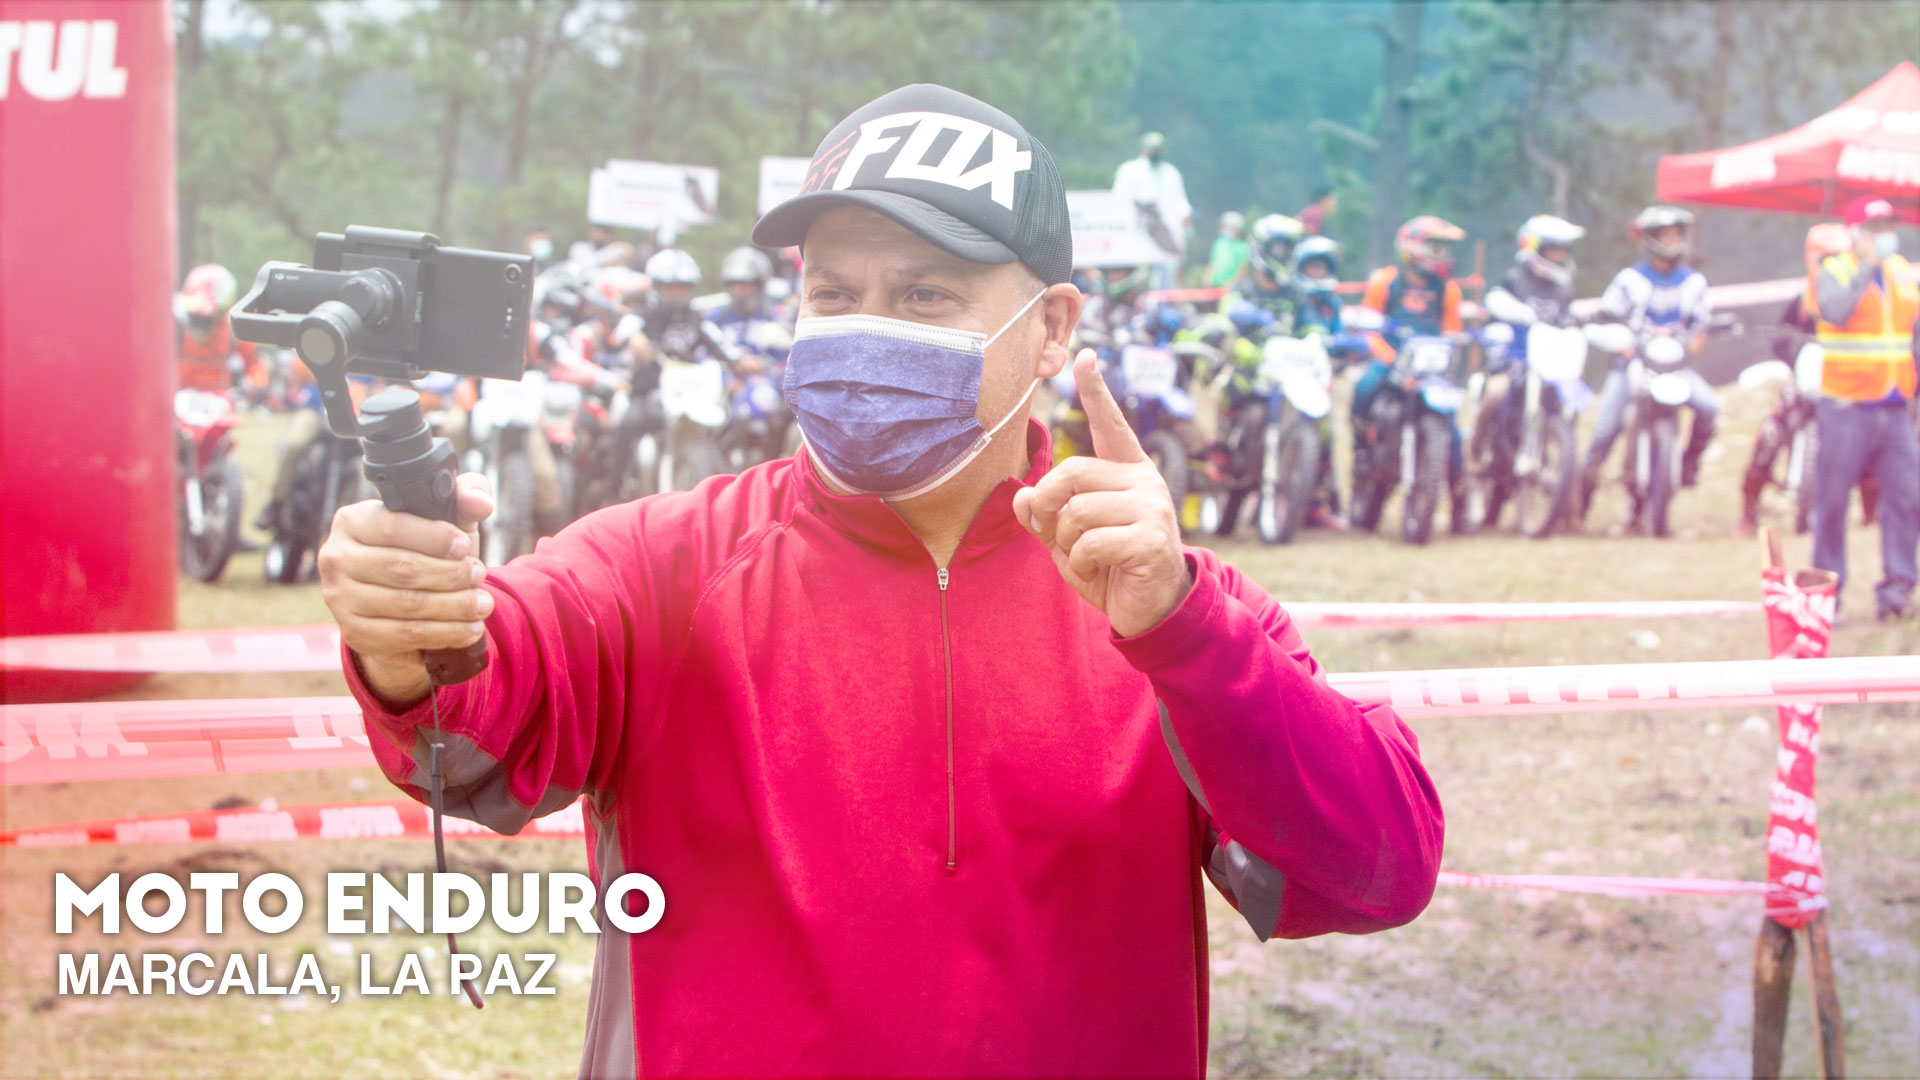 Moto enduro, Marcala La Paz -www.lorenzana.live